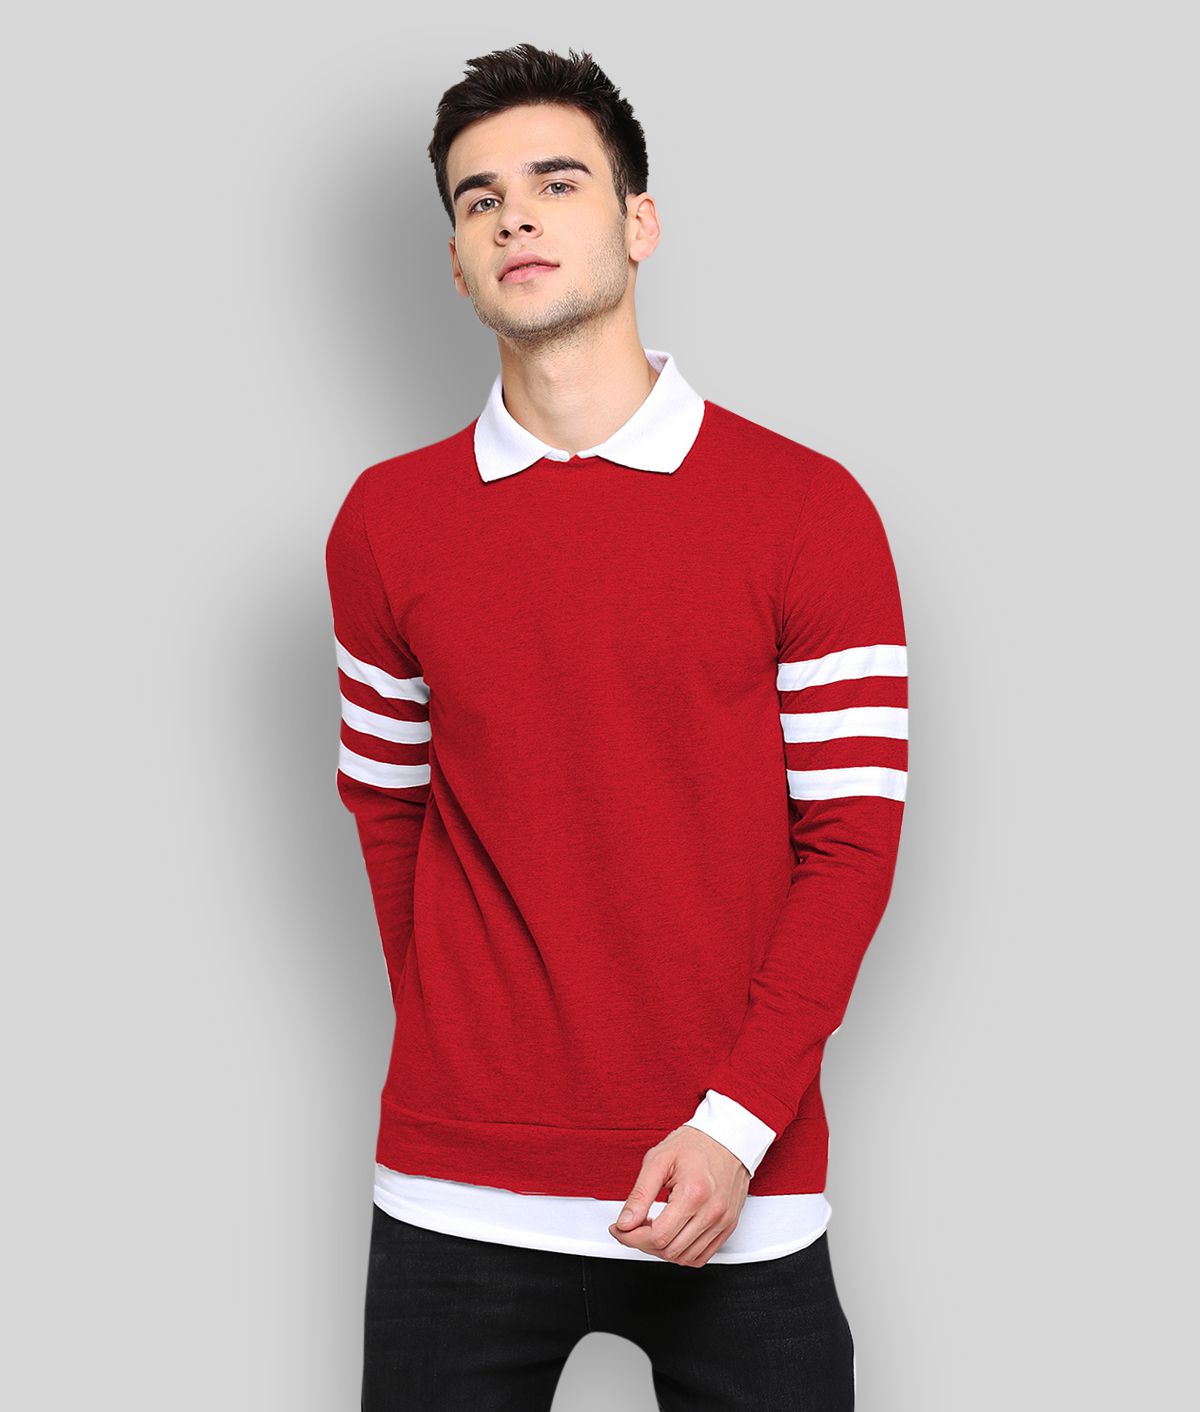     			LEWEL - Red Cotton Slim Fit Men's T-Shirt ( Pack of 1 )